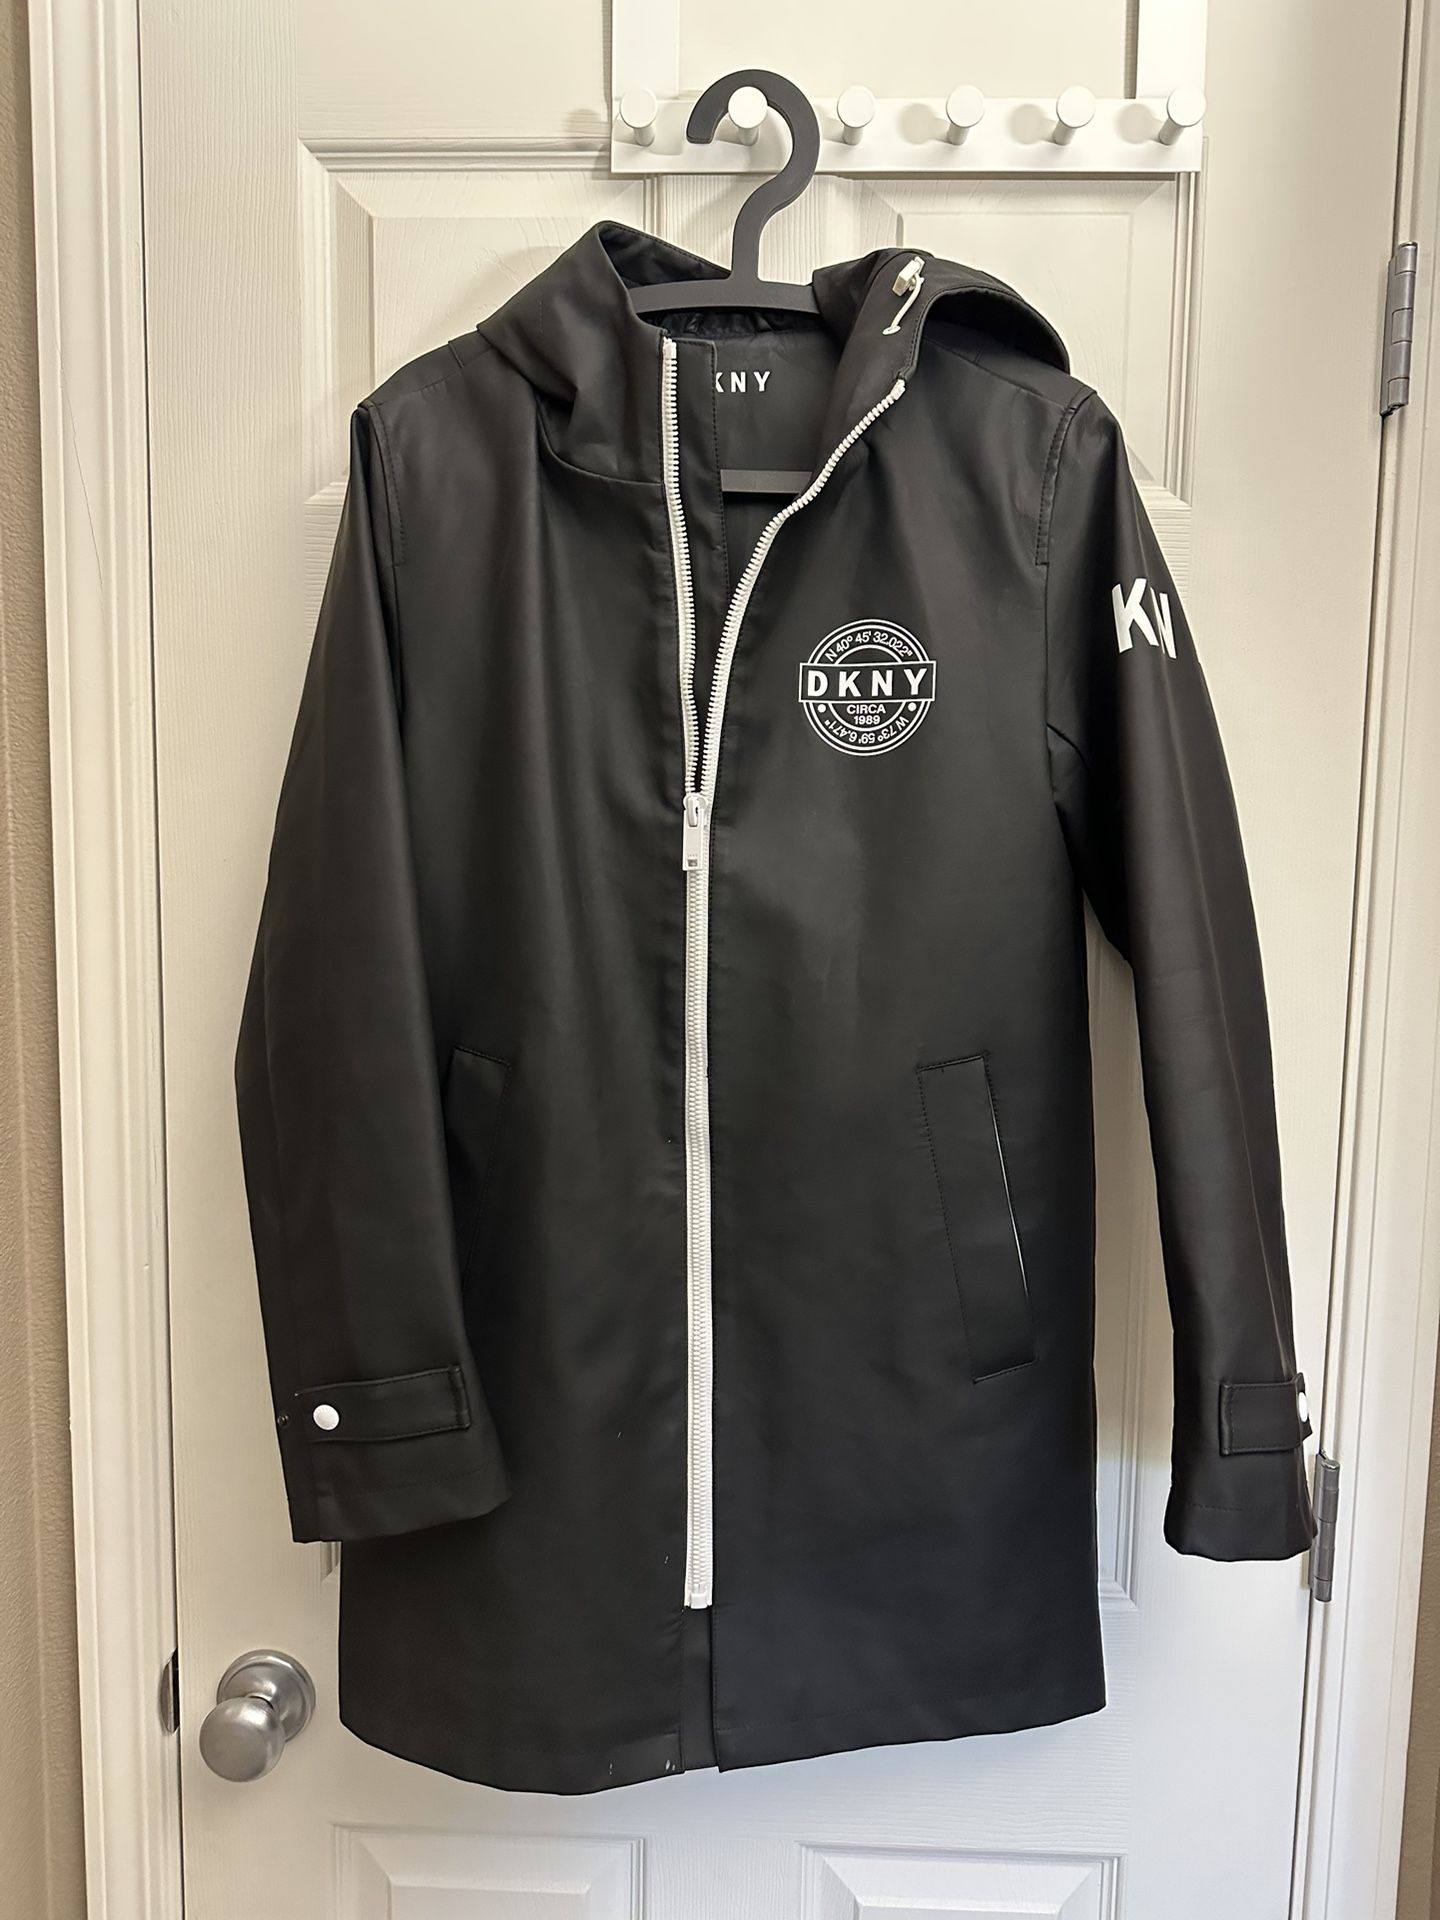 DKNY Durable Men’s Rain Jacket Rain Coat